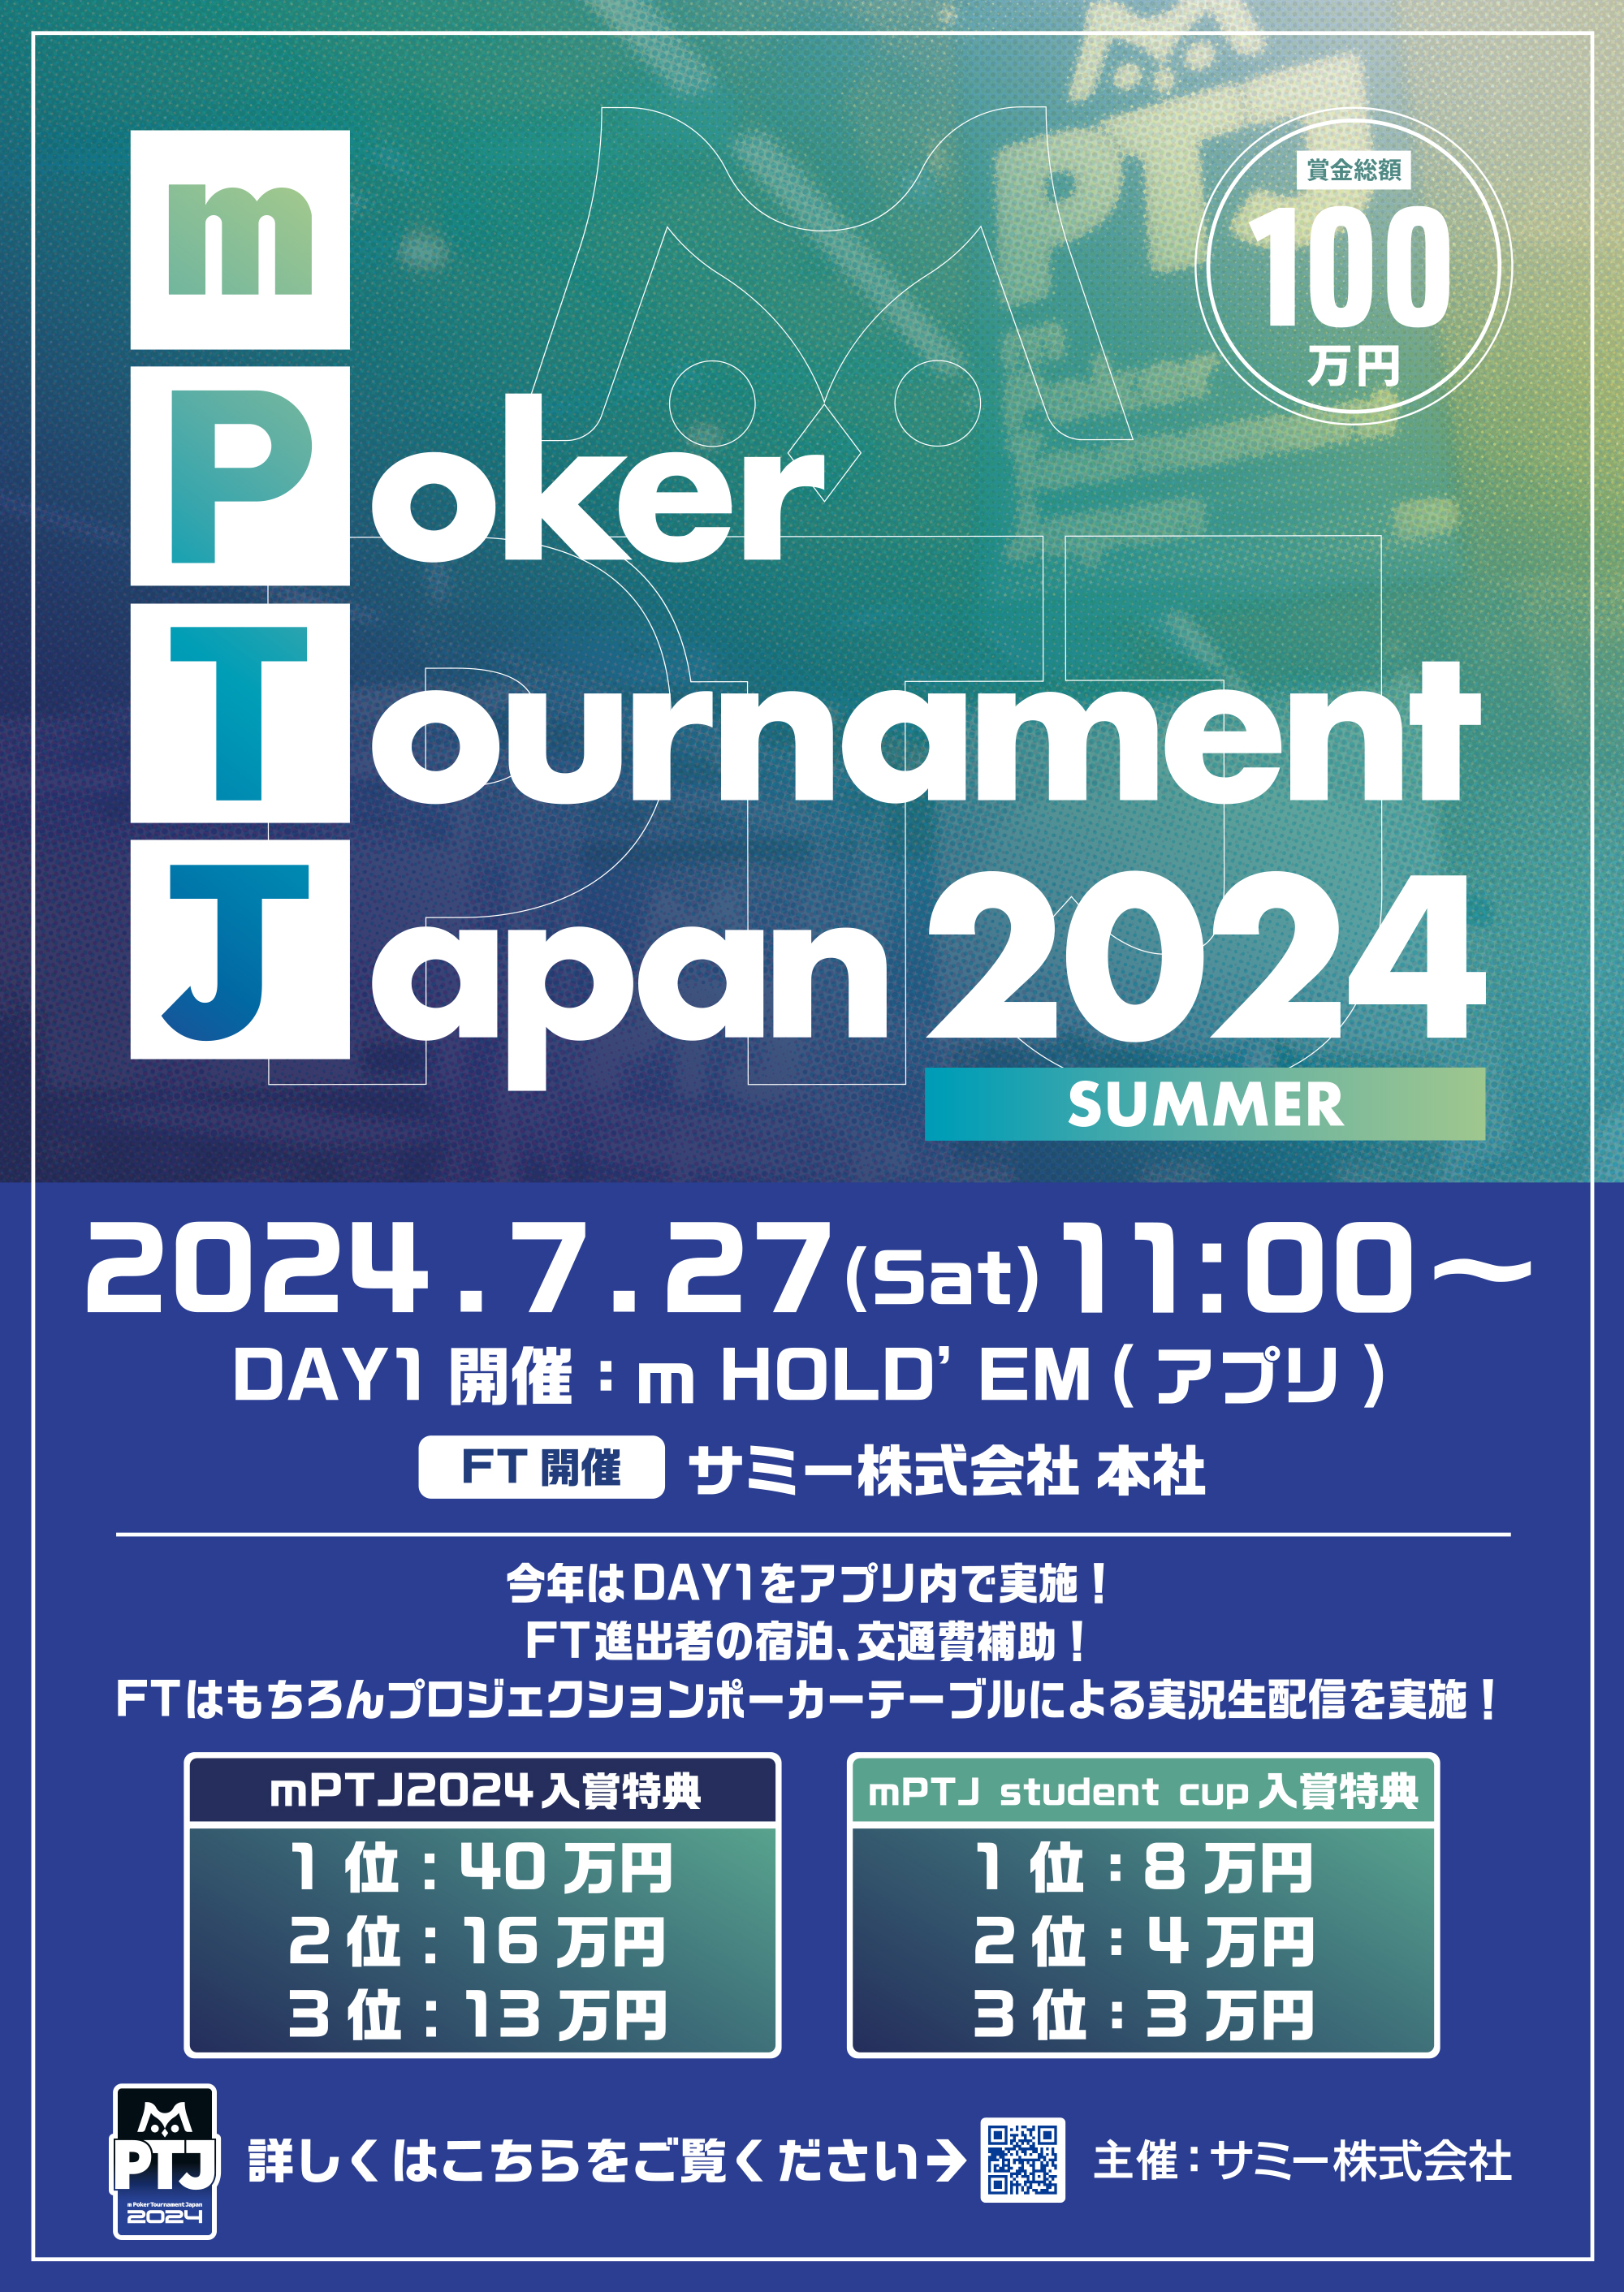 m Poker Tournament Japan 2024 SUMMER 2024.7.27(Sat) 11:00〜 DAY1 開催 m HOLD'EM（アプリ）FT開催 サミー株式会社 本社